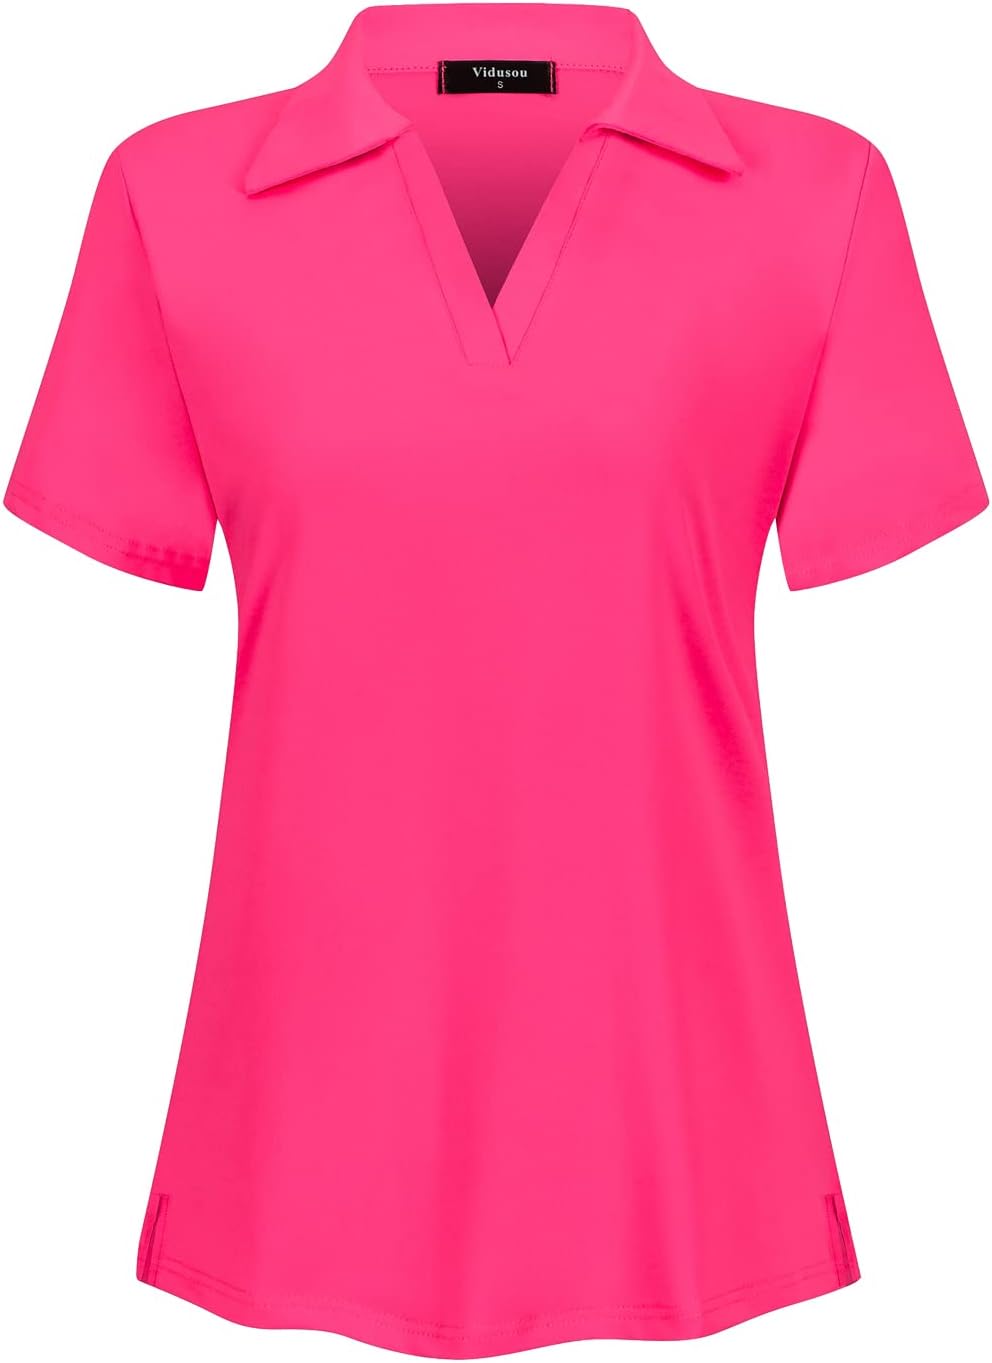 Vidusou Women’s Short Sleeve Golf Polo Shirts Tennis Shirts Sport T-Shirts Workout Tops Review 1